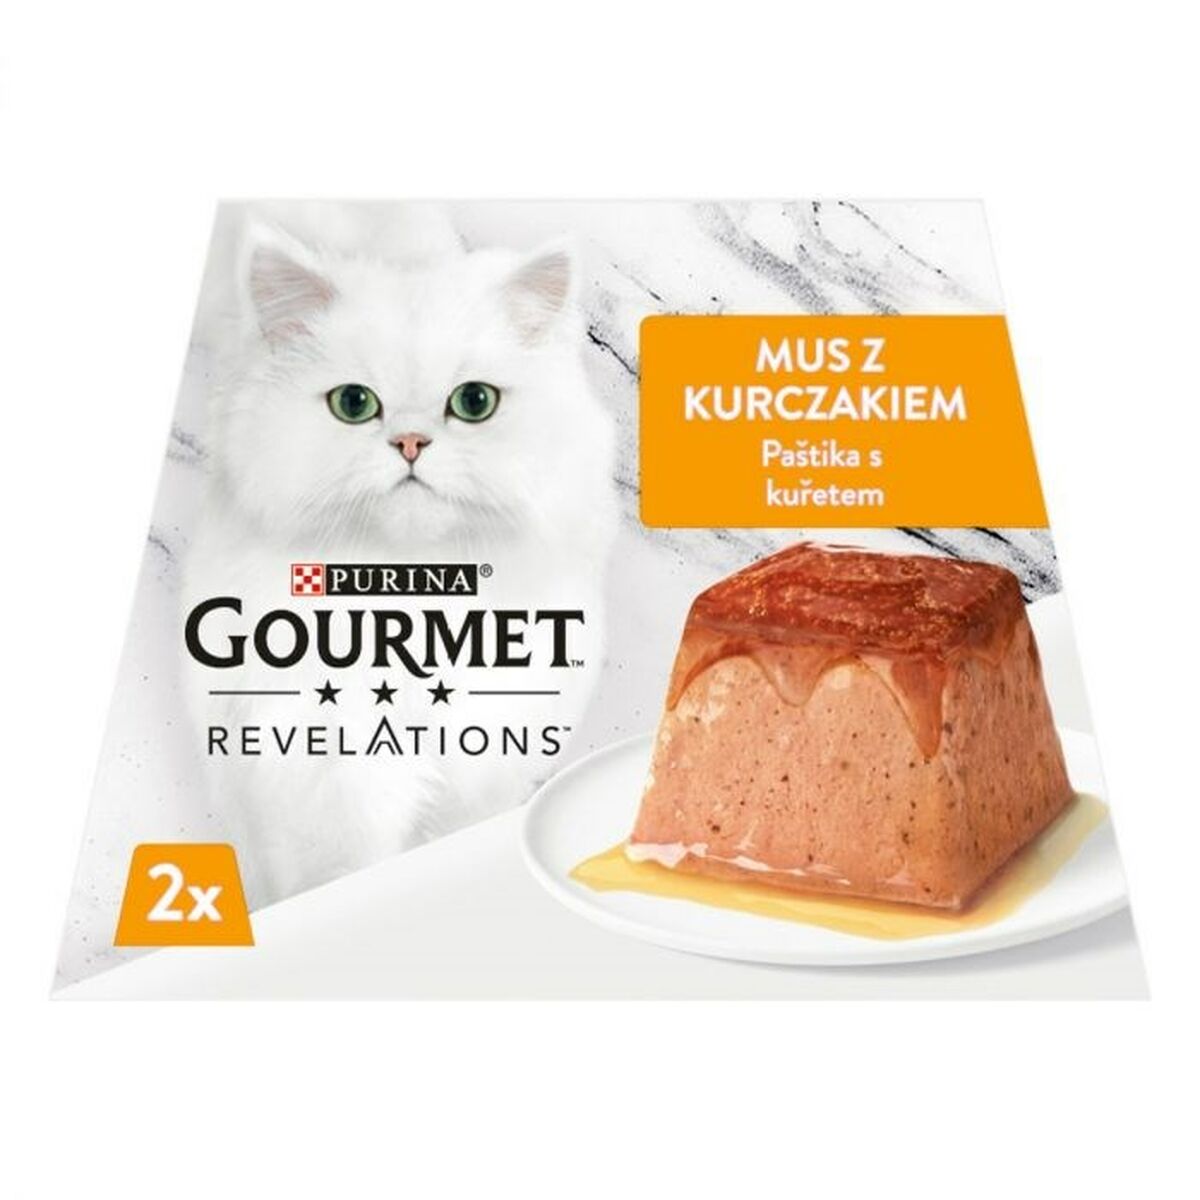 Aliments pour chat Purina Gourmet Poulet